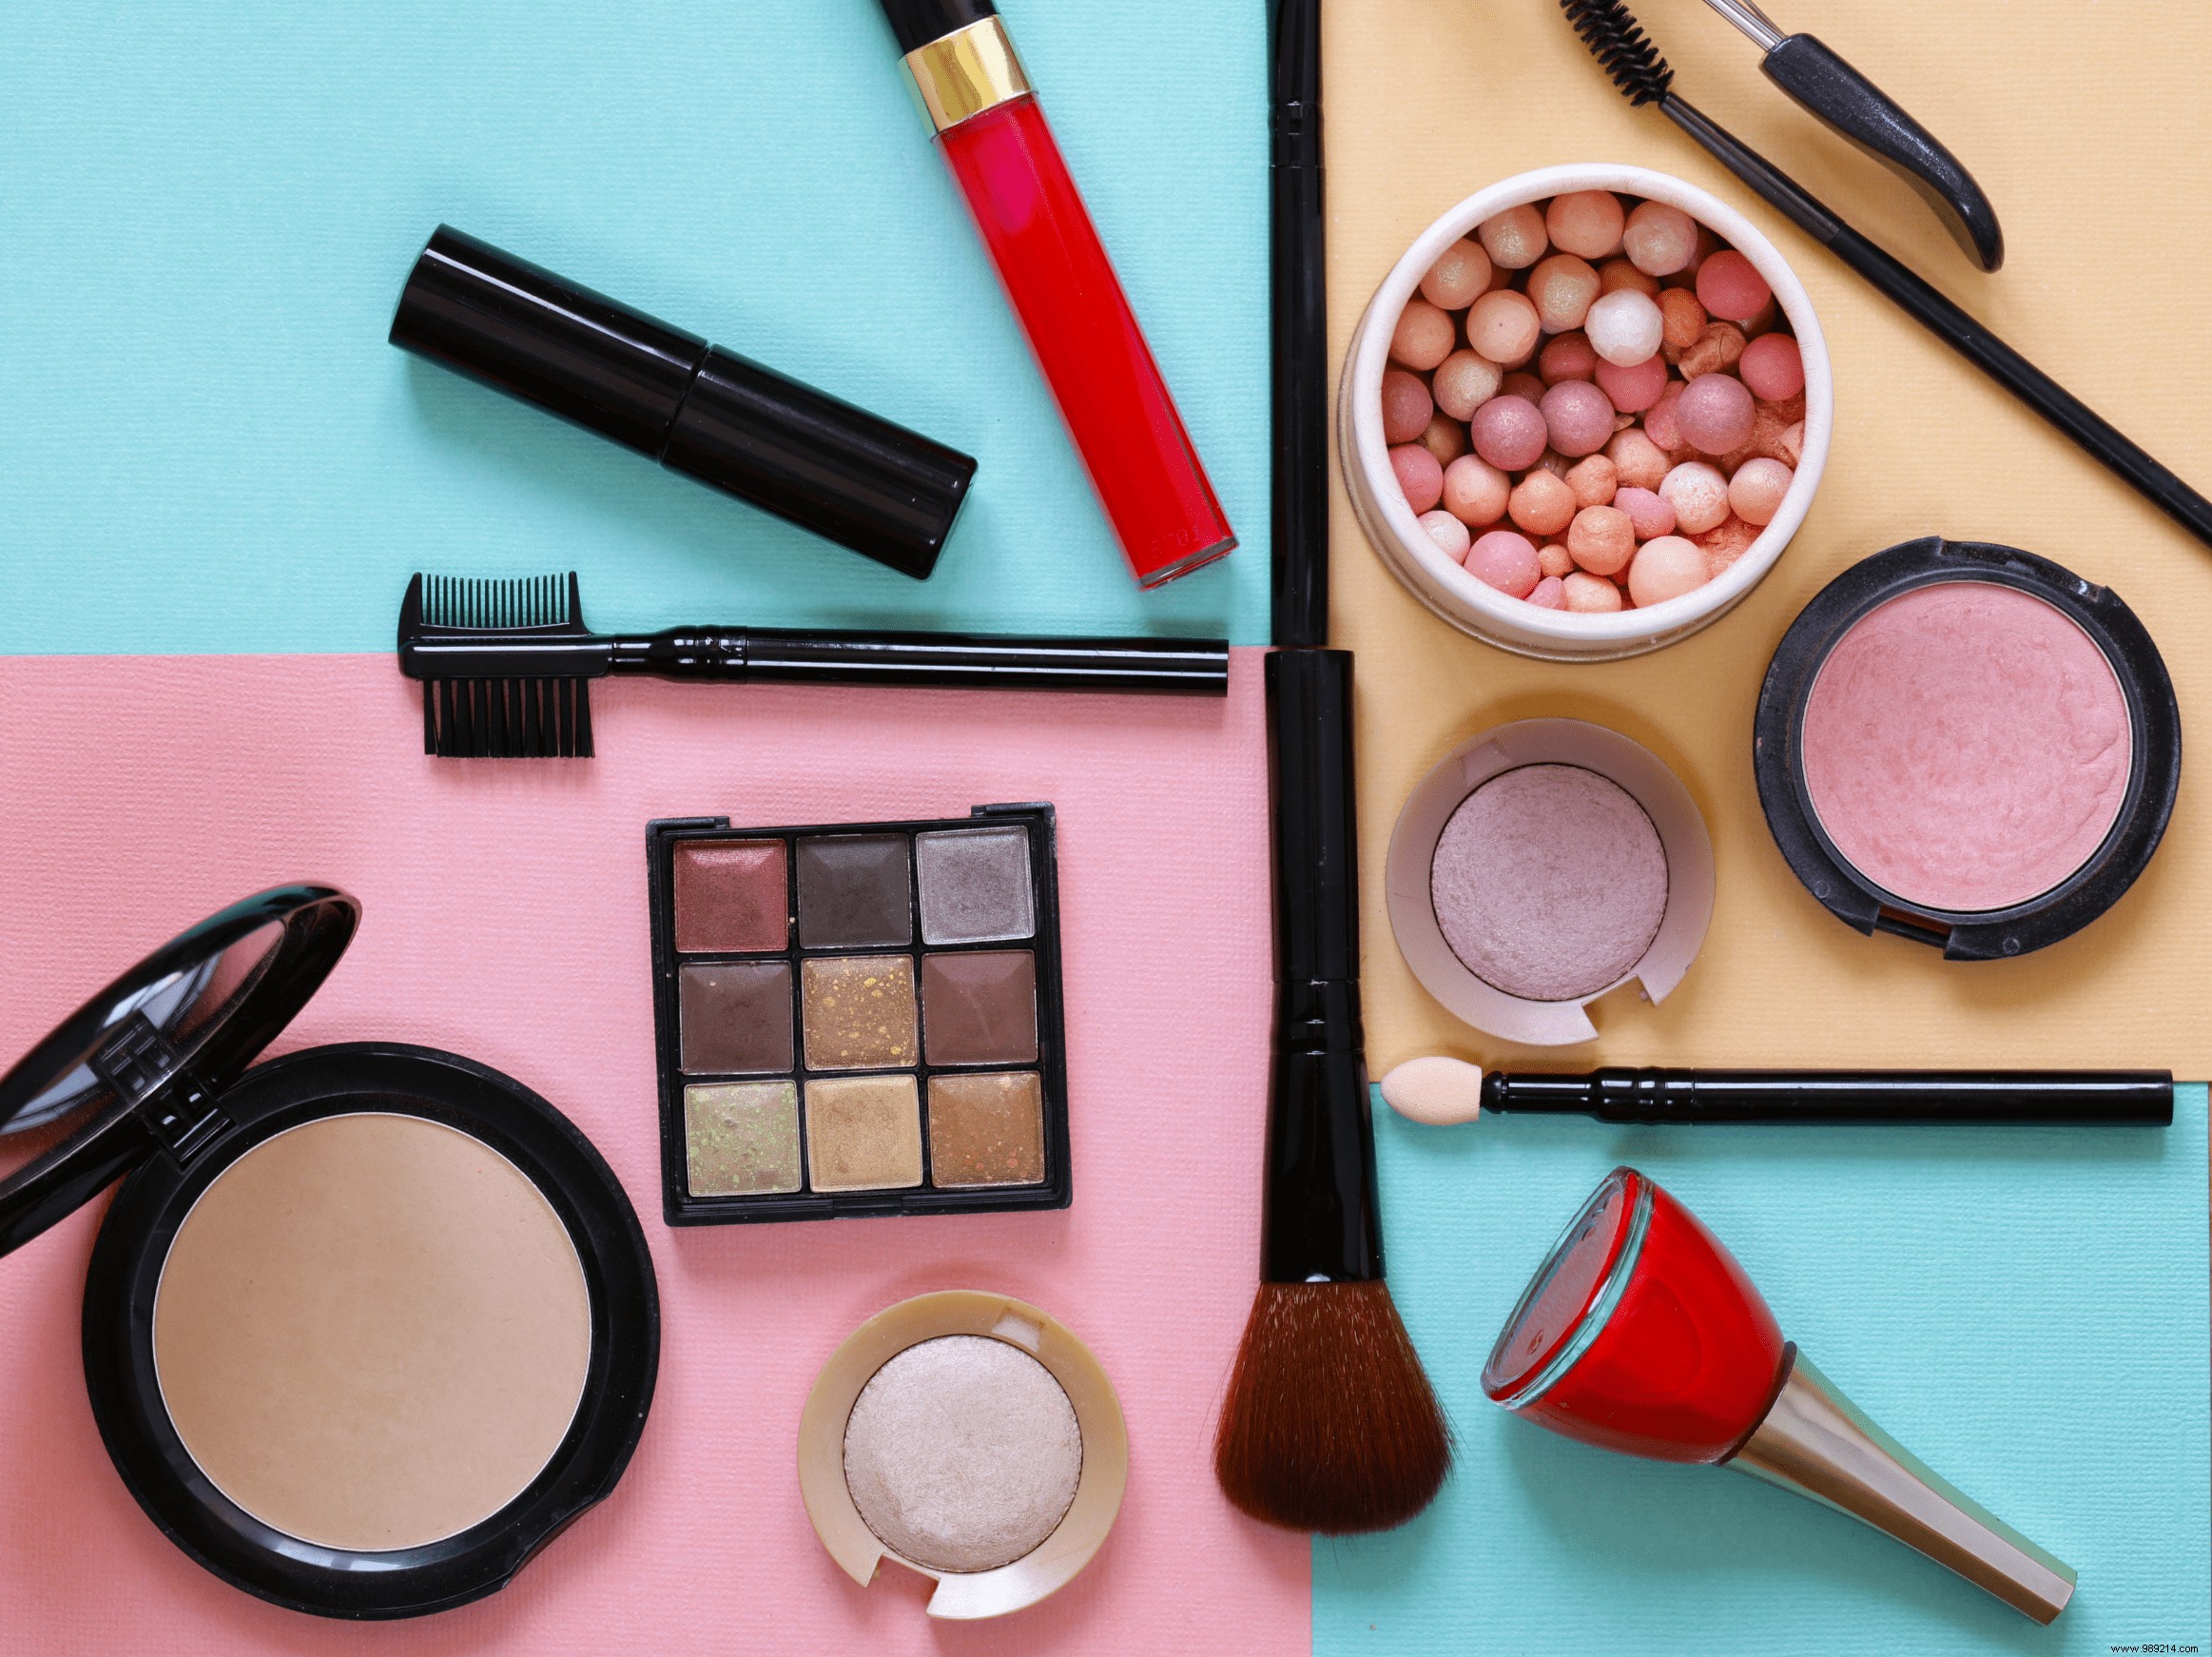 Is organic makeup more natural? 